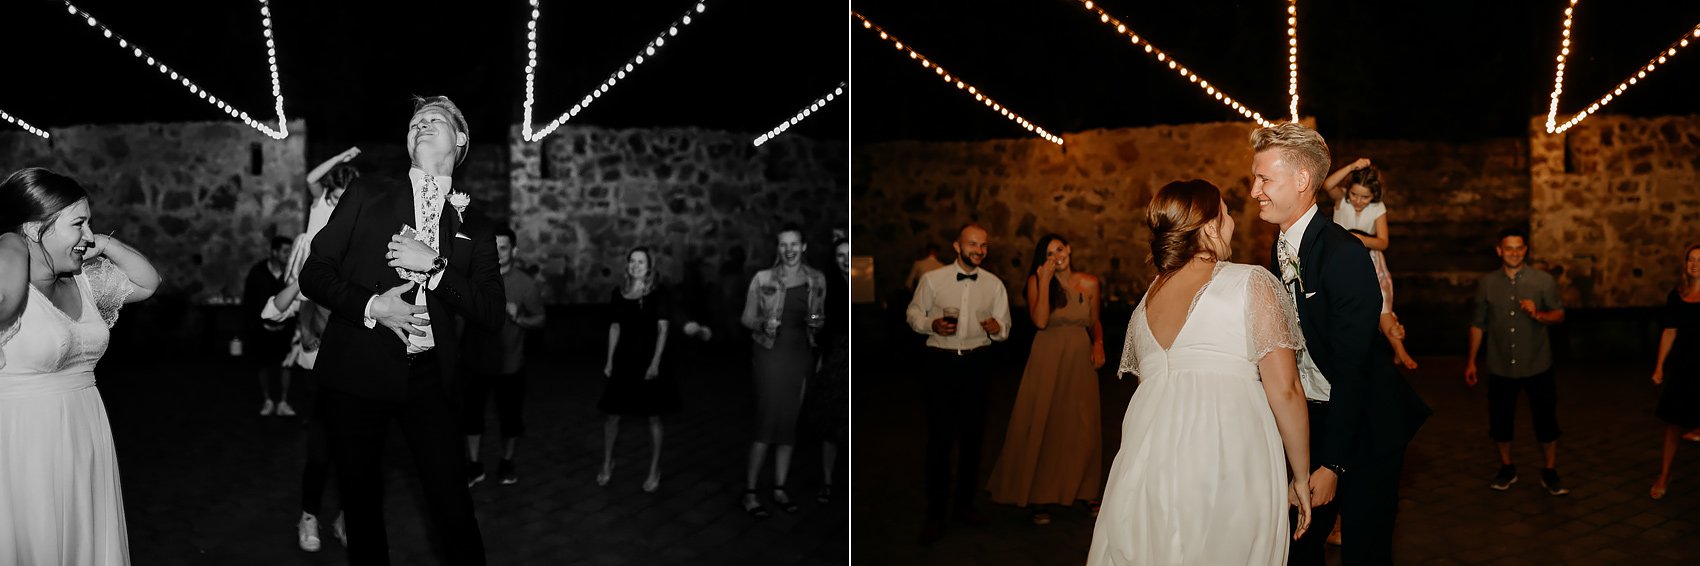 446-wedding-gallery.jpg